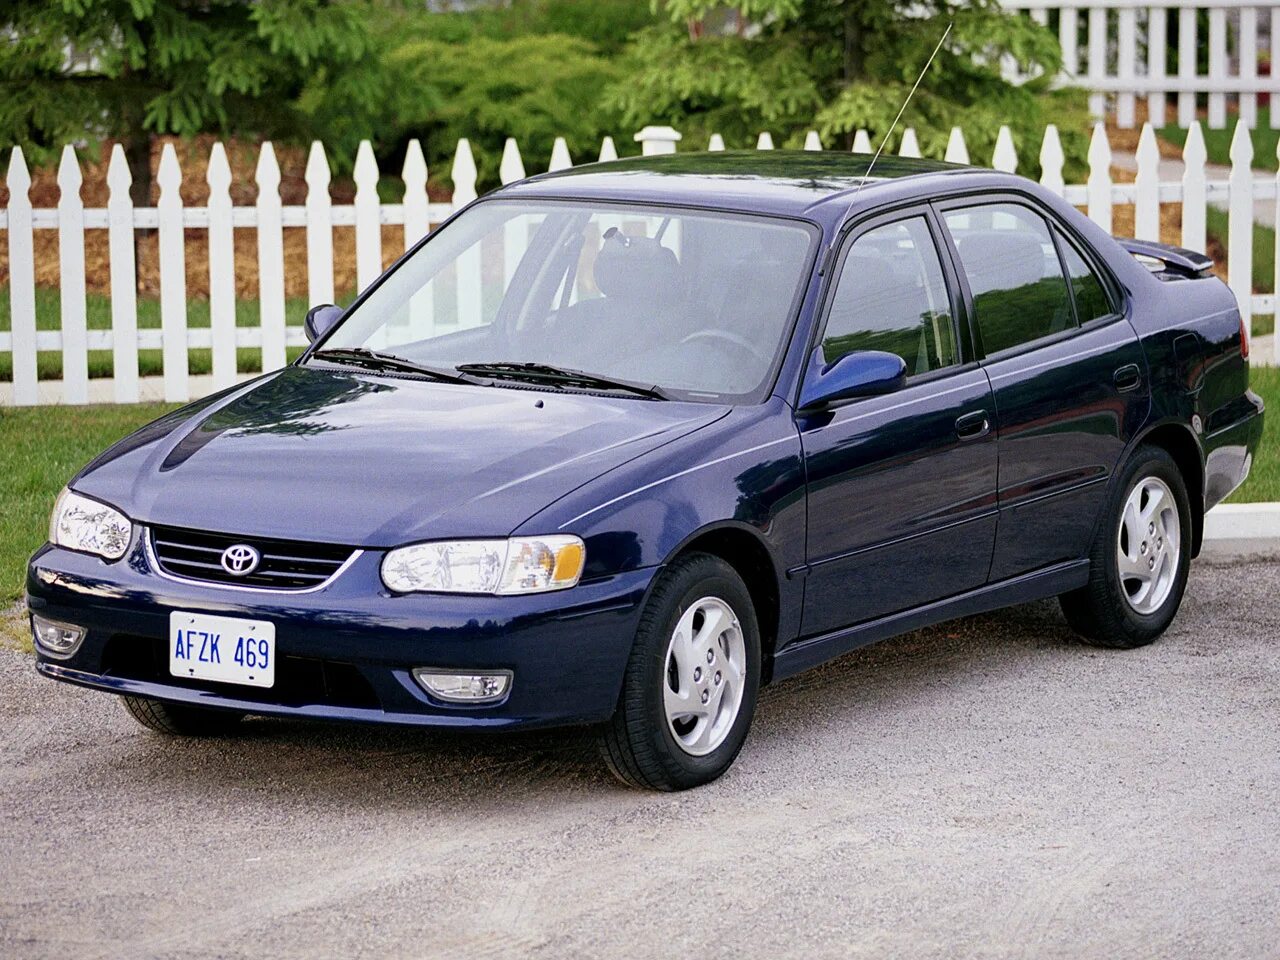 Королла 2 поколение. Toyota Corolla e110 седан. Тойота Королла 8 поколение. Toyota Corolla 2001 седан. Тойота Королла 8 поколение седан.